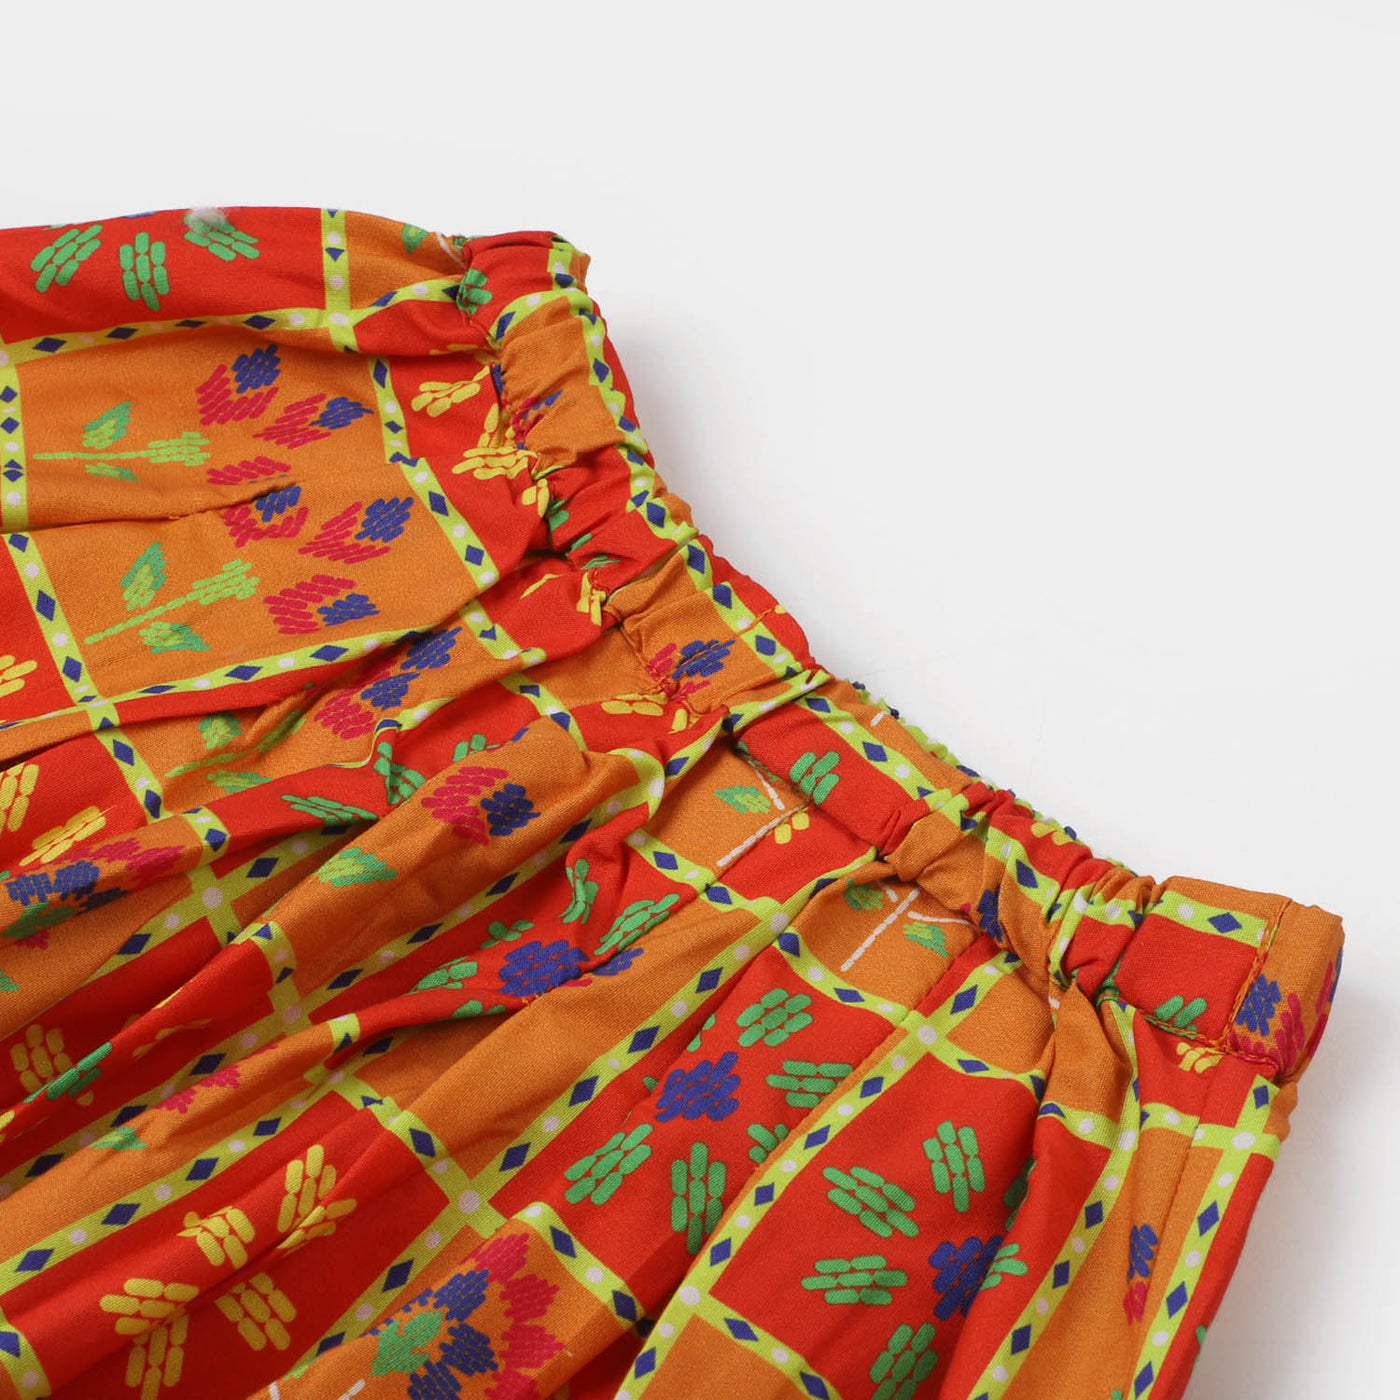 Girls Digital Print Cotton Long Skirt - Multi